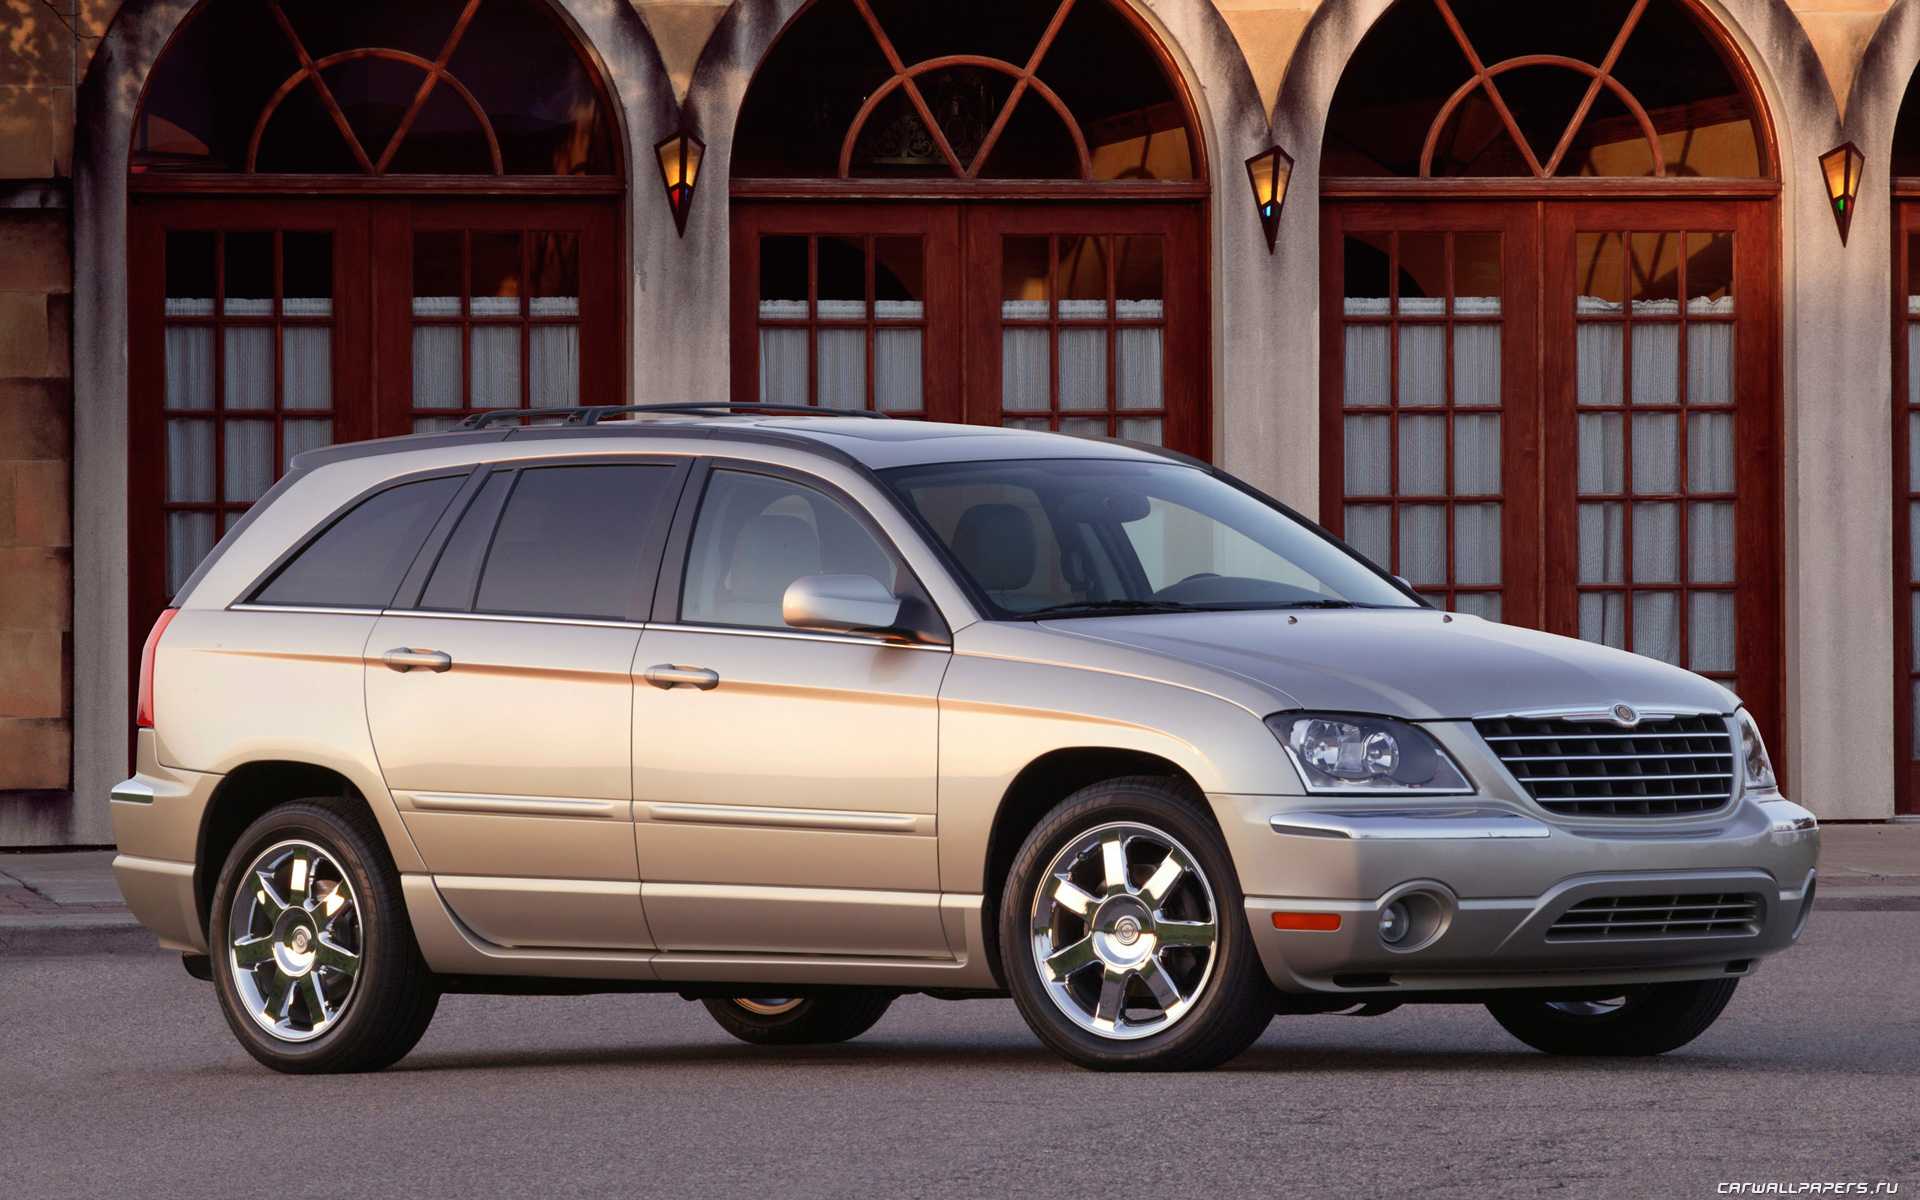 Chrysler pacifica - характеристики, комплектации, фото, видео